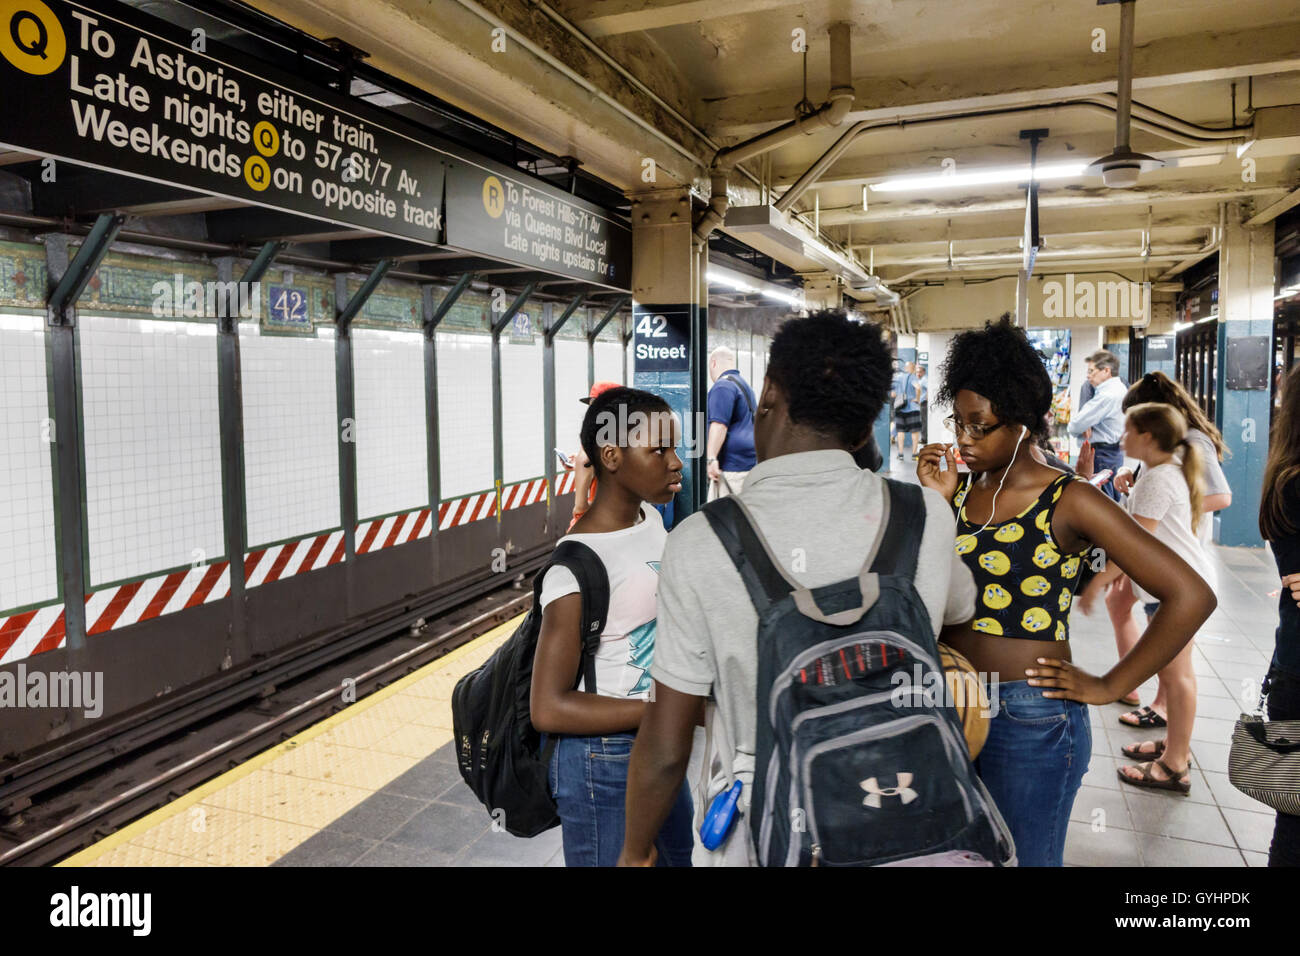 New York City,NY NYC,Manhattan,Midtown,42nd Street,Times Square,subway,station,MTA,public transportation,platform,Black Blacks African Africans ethnic Stock Photo